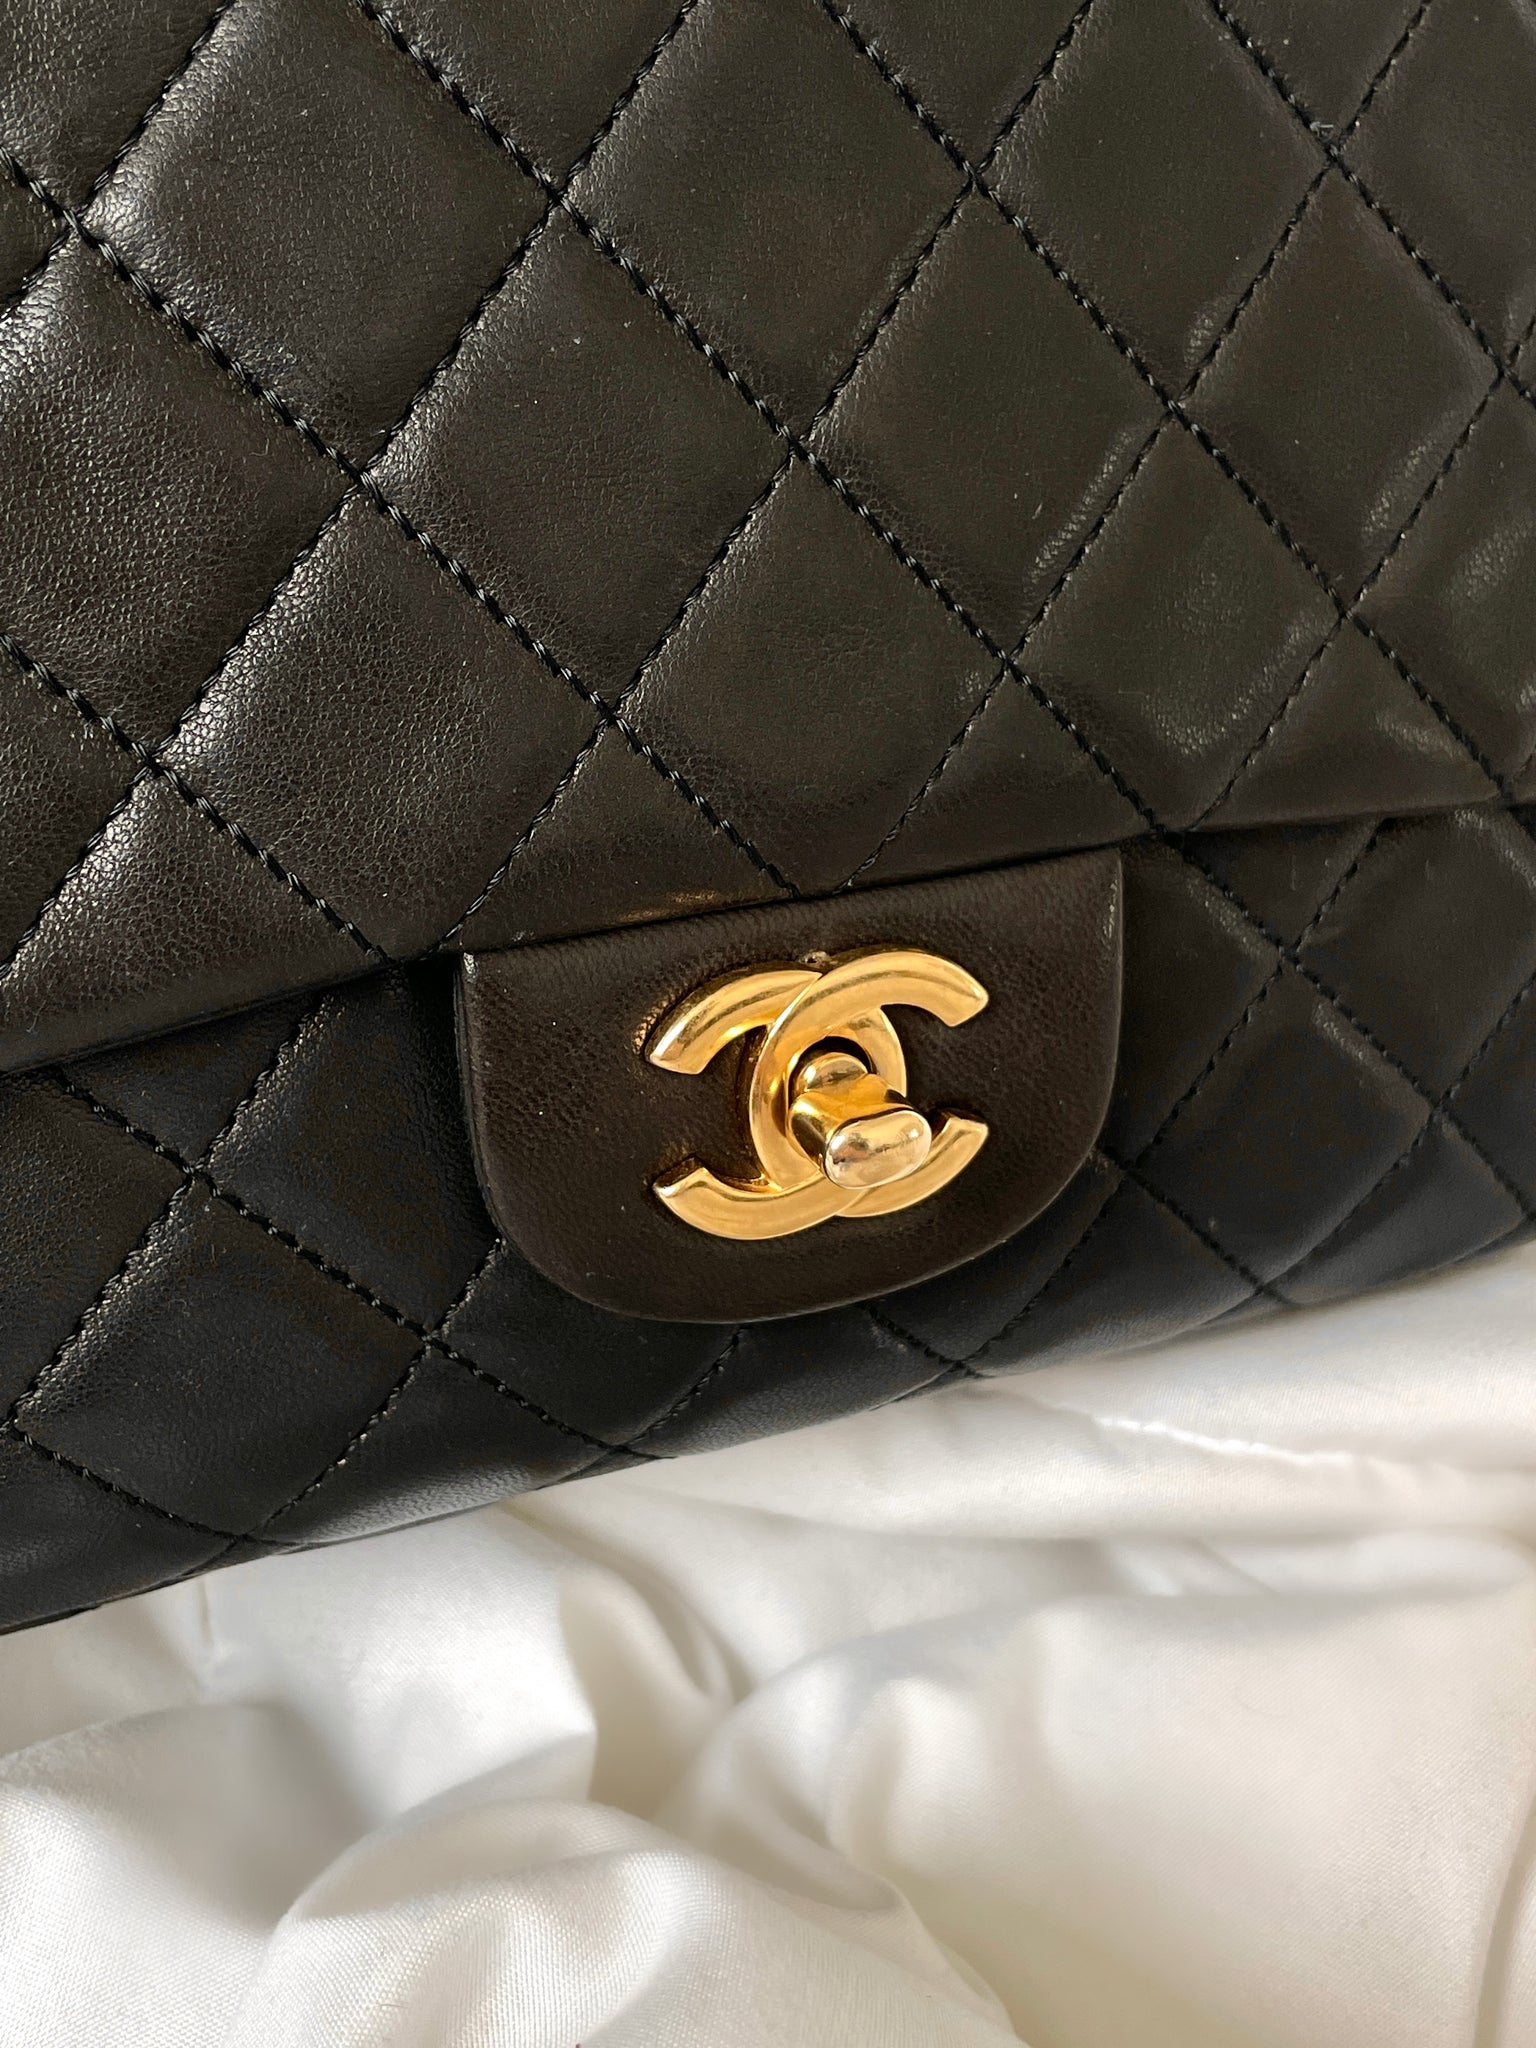 CHANEL, Bags, Limited Chanel Jumbo Double Flap So Black Bag